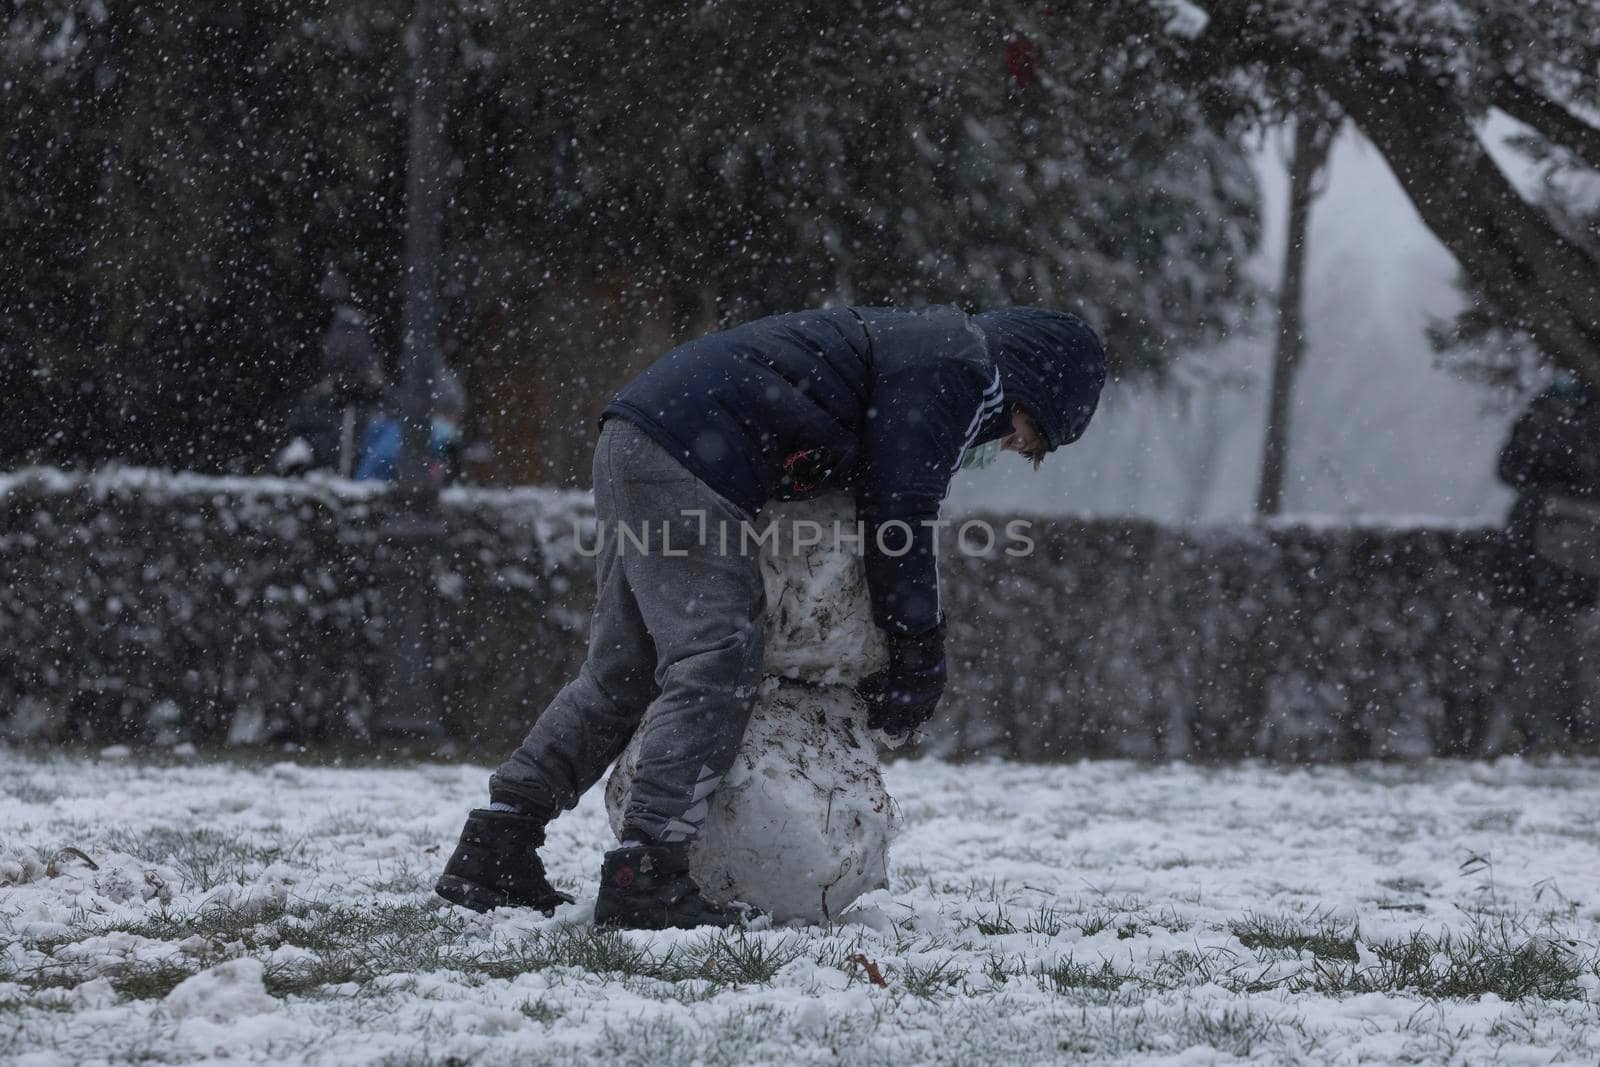 Children playing with snow and making snowmen, in Retiro park, Madrid. by alvarobueno